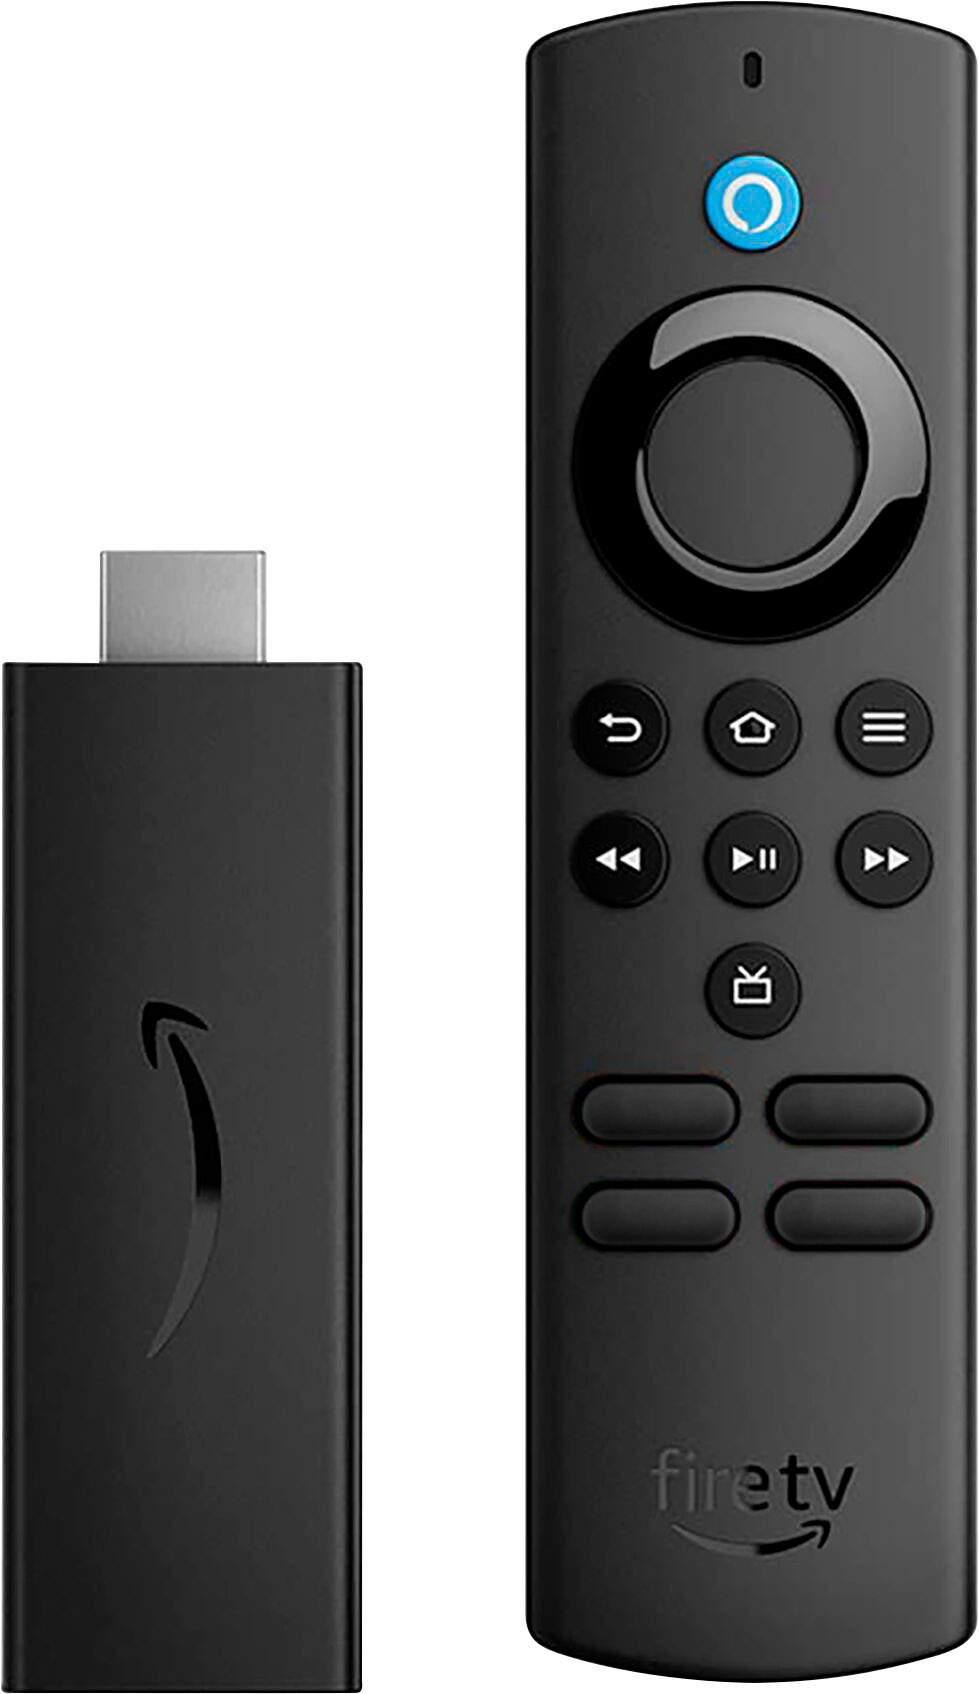 Amazon Fire TV Stick Lite HD Streaming Device (Black) $15 + Free Shipping